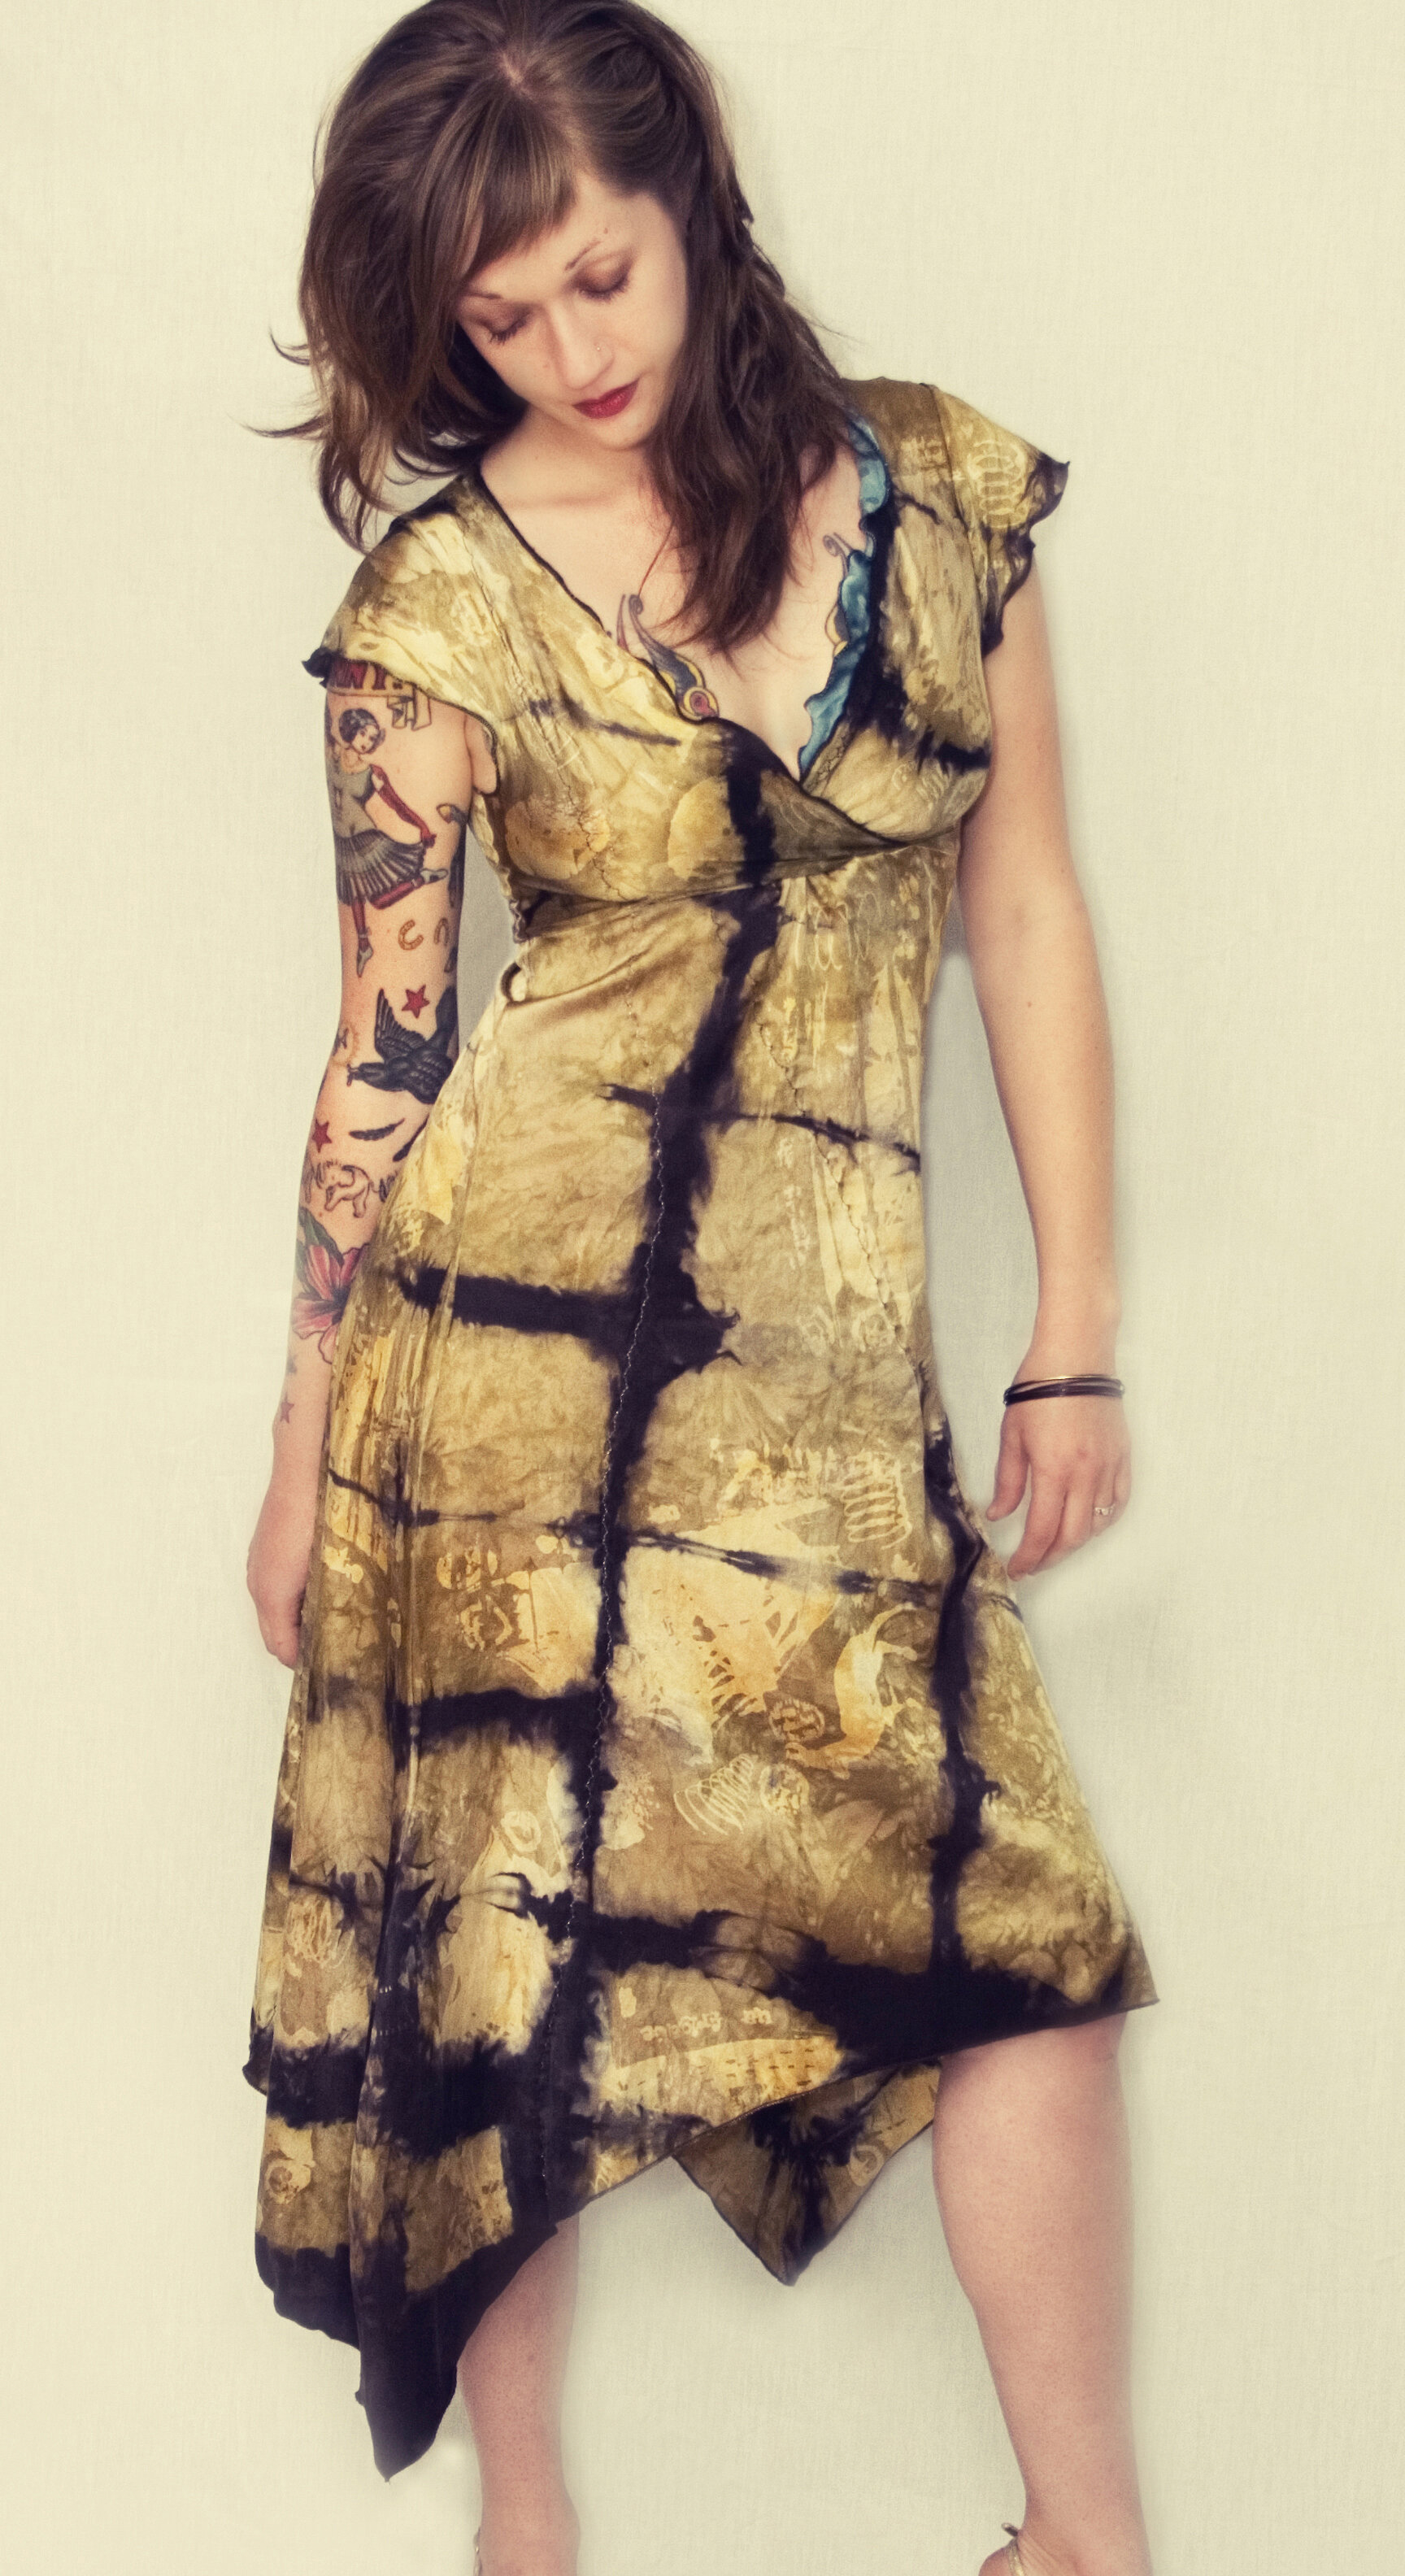 Ruffled Gelato Dress. Photo by Christina Shaffel